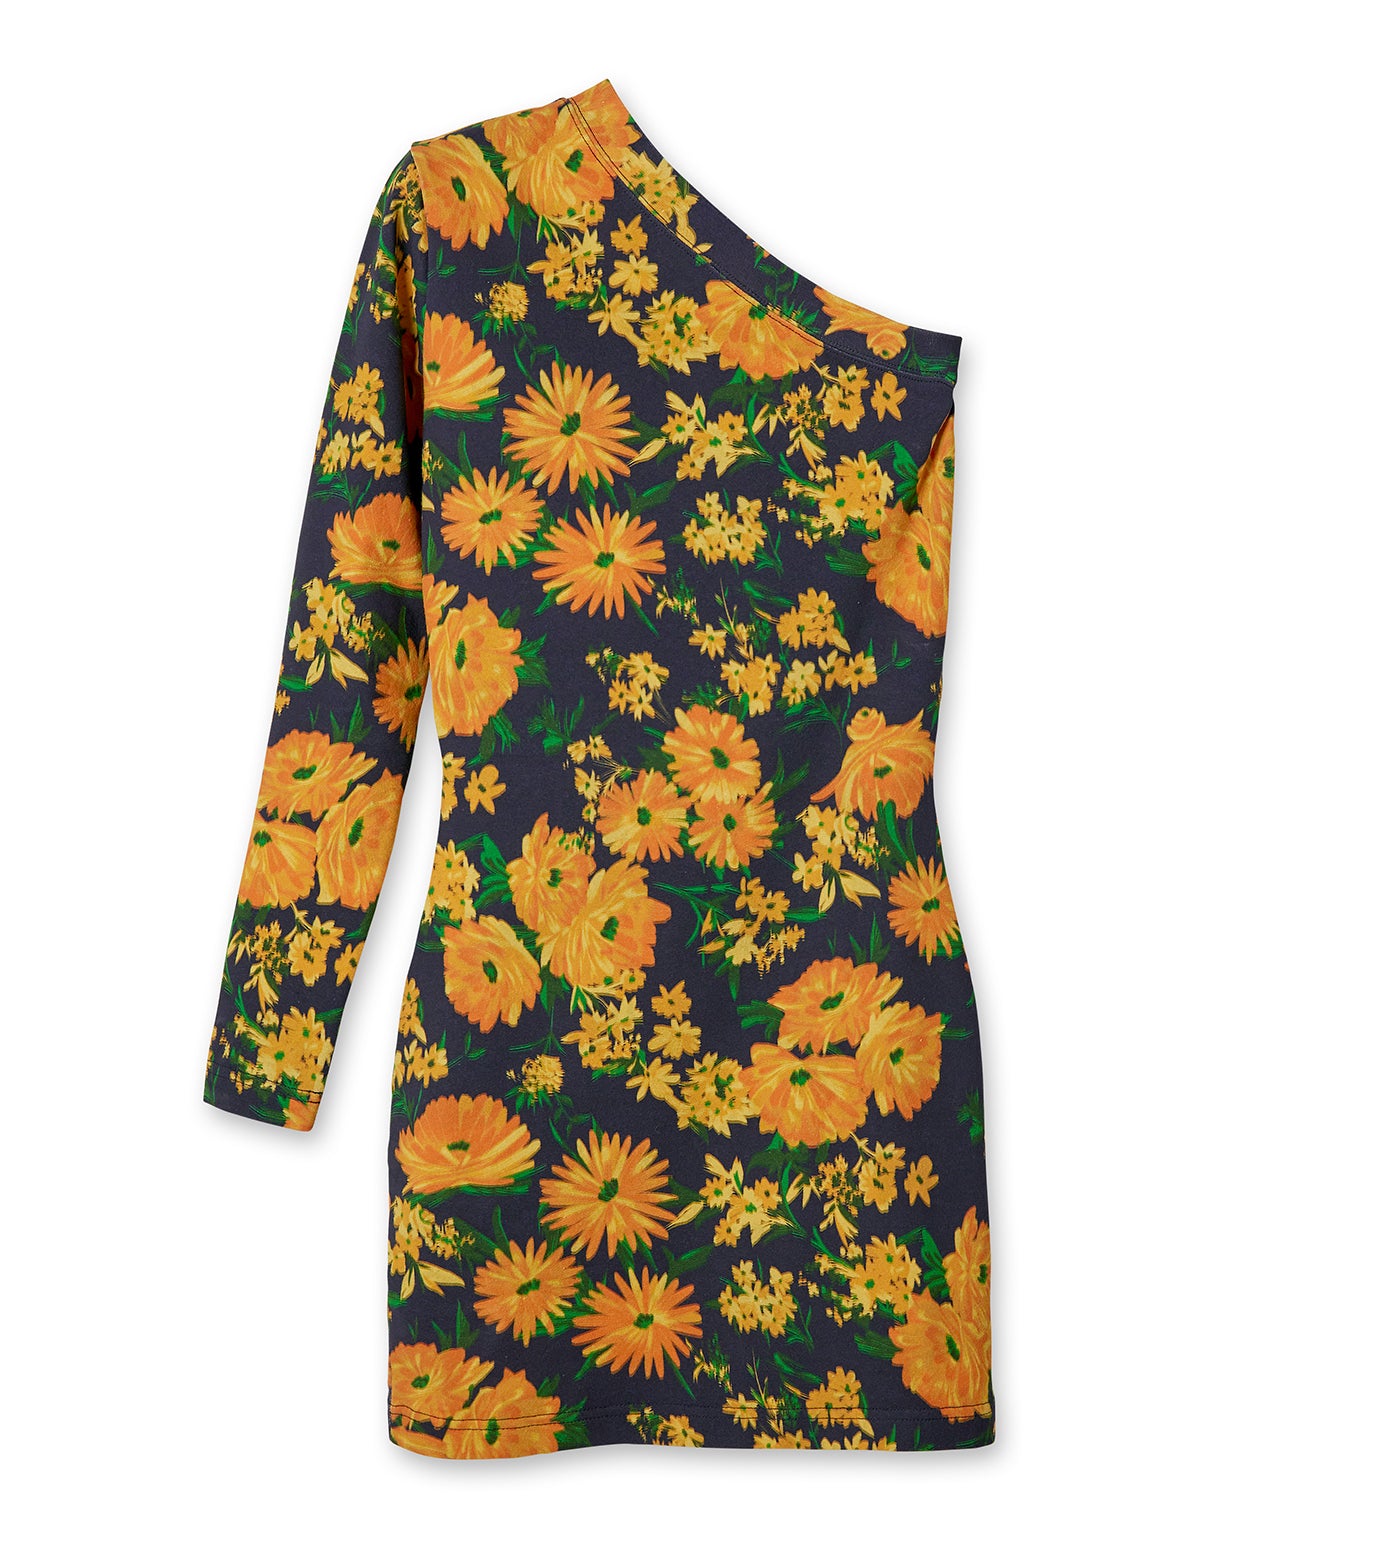 Yellow Bouquet Asym Dress